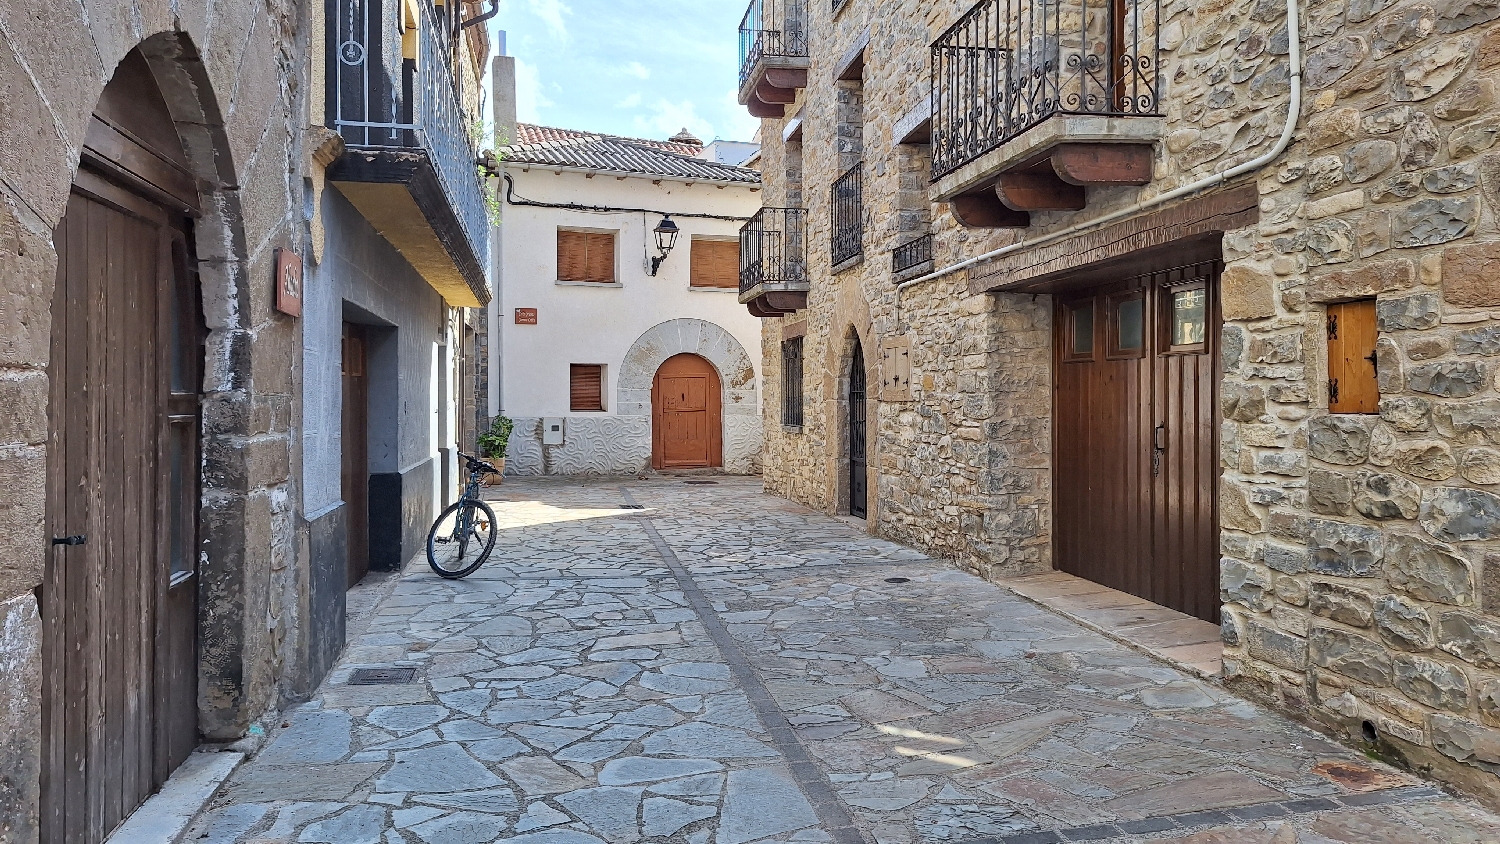 El Camino, Aragon út, Santa Cilia, a municipal albergue utcája